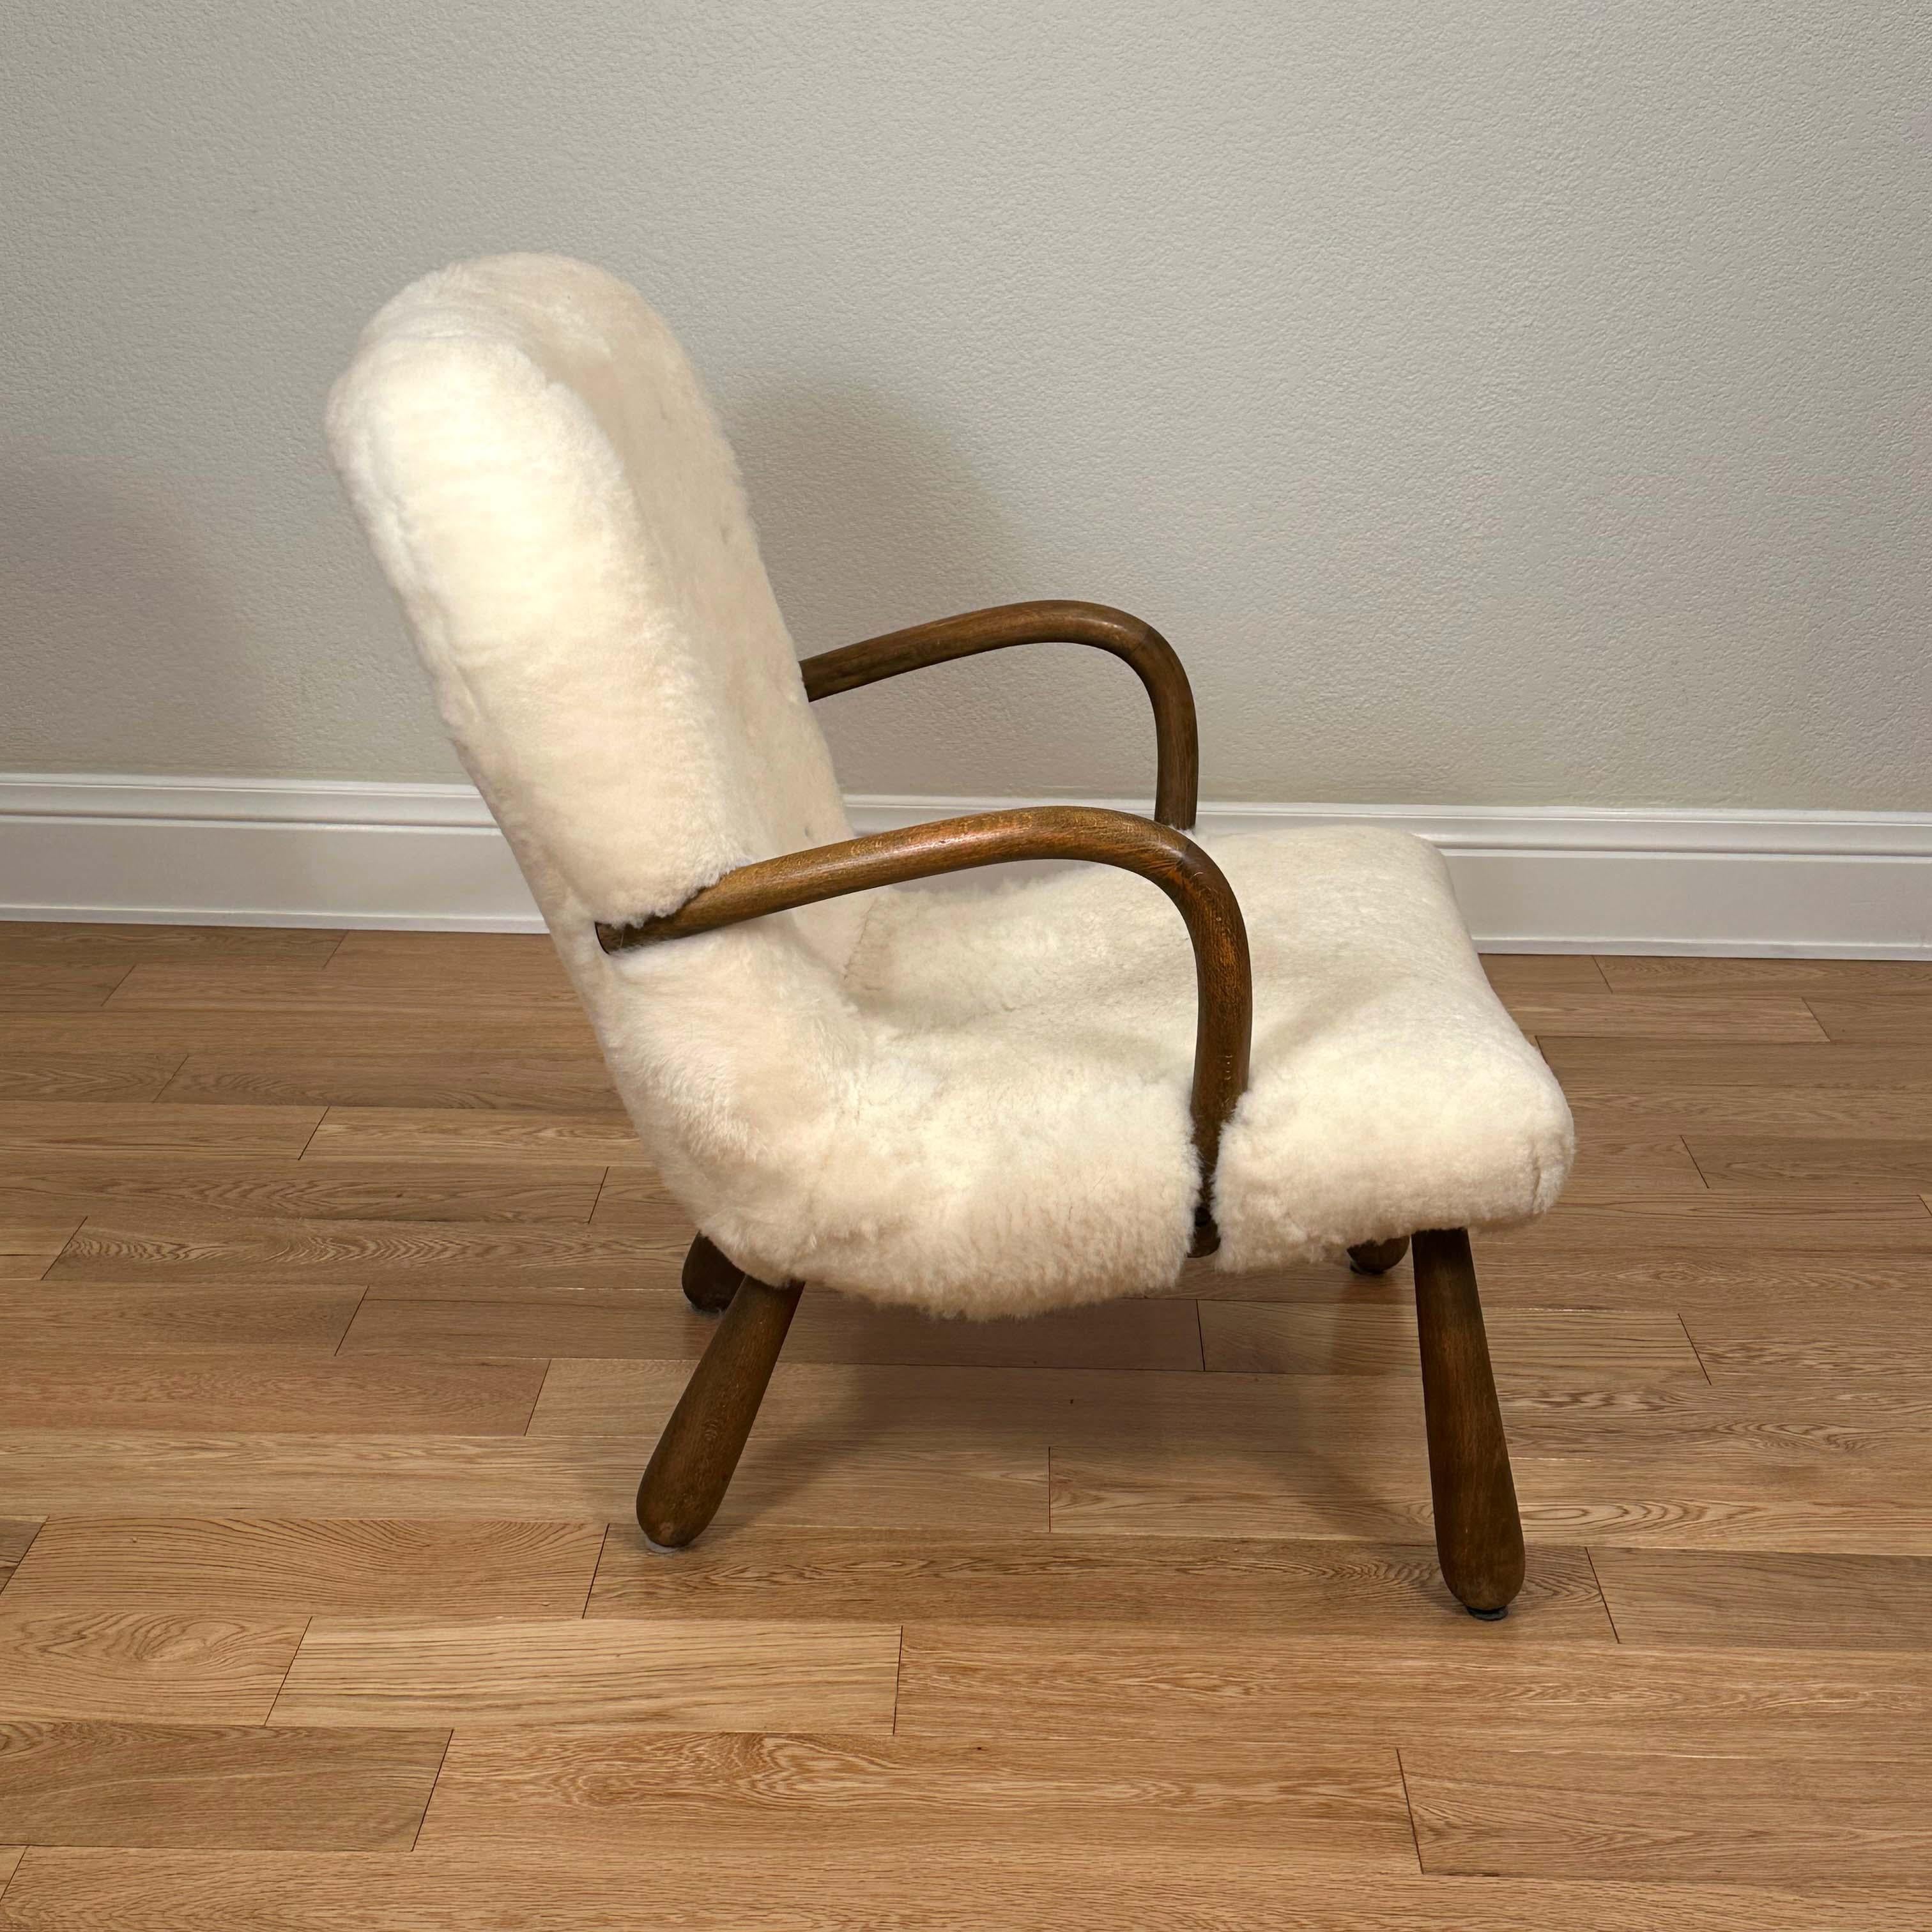 philip chair